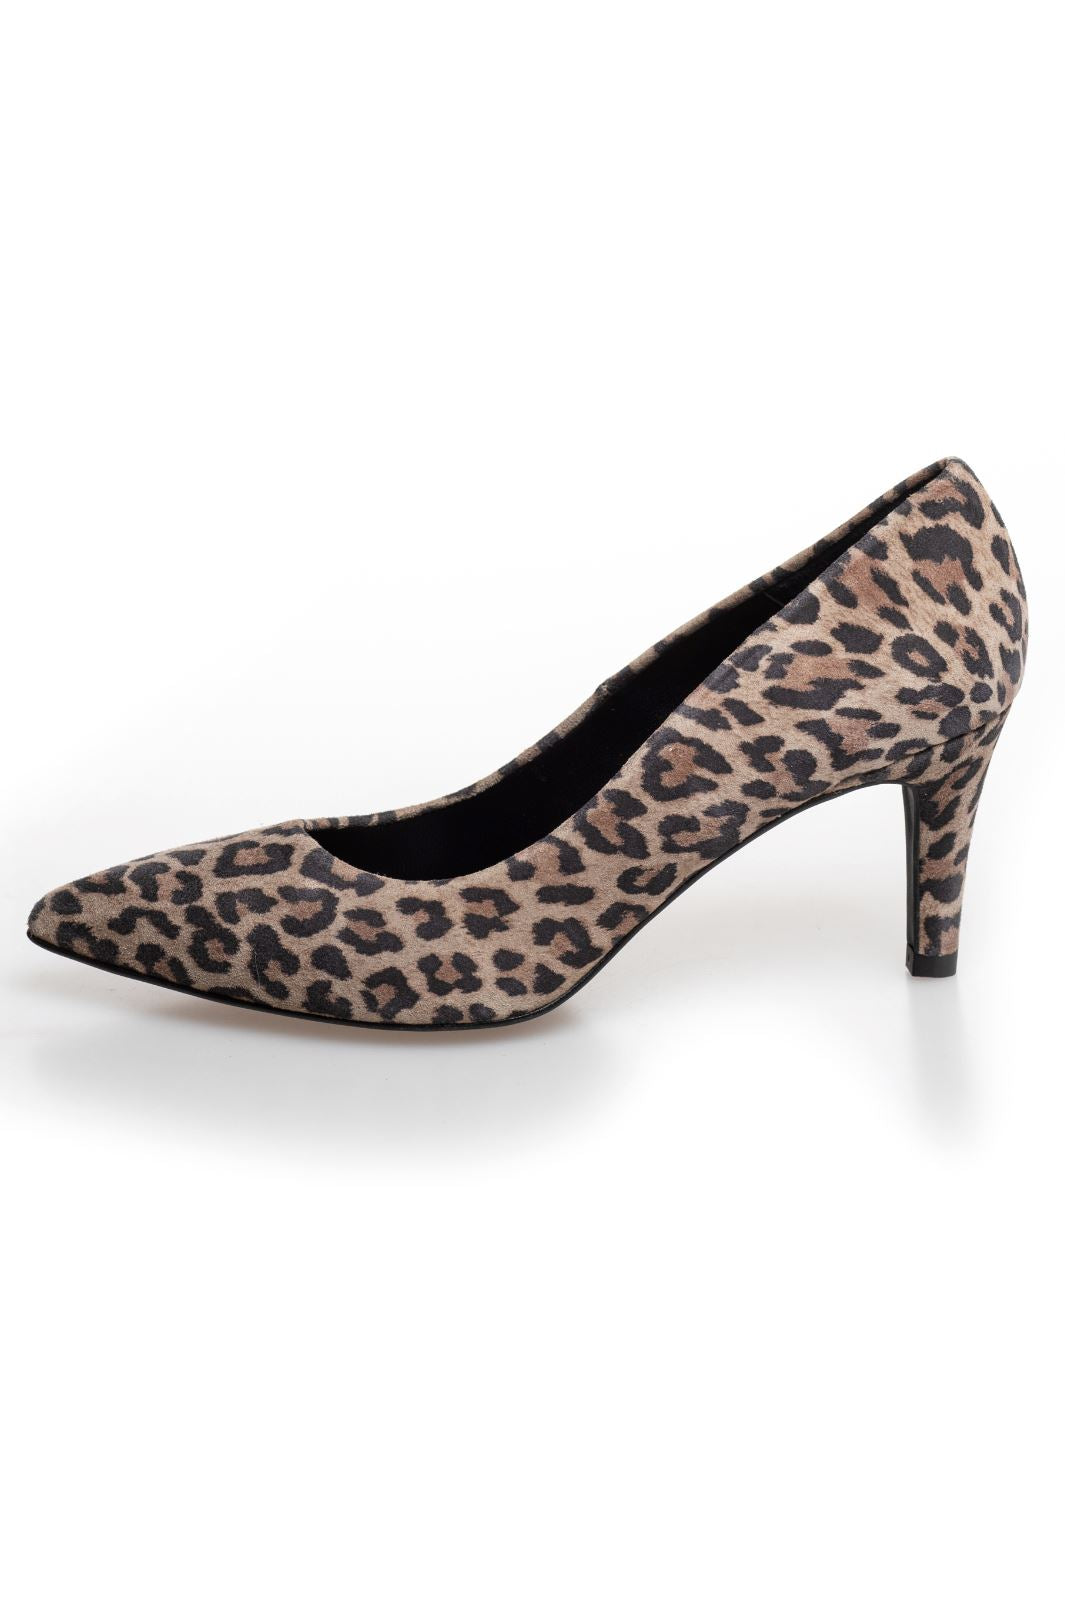 Copenhagen Shoes - Siesta - Brown Leopard Stiletter 